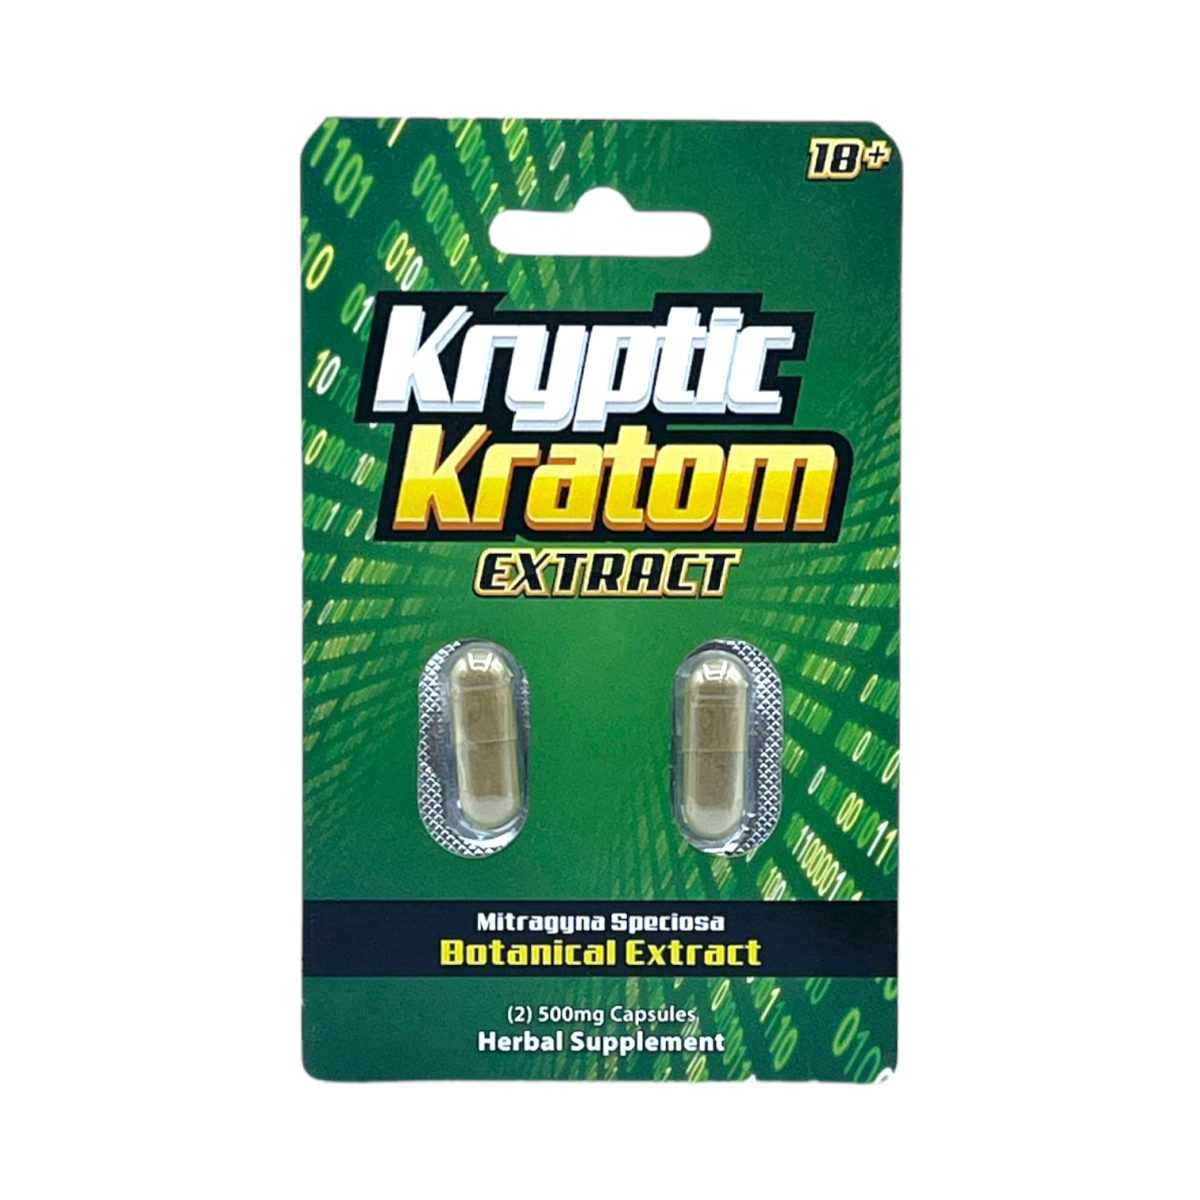 Kryptic Kratom Extract Capsules – 2 count